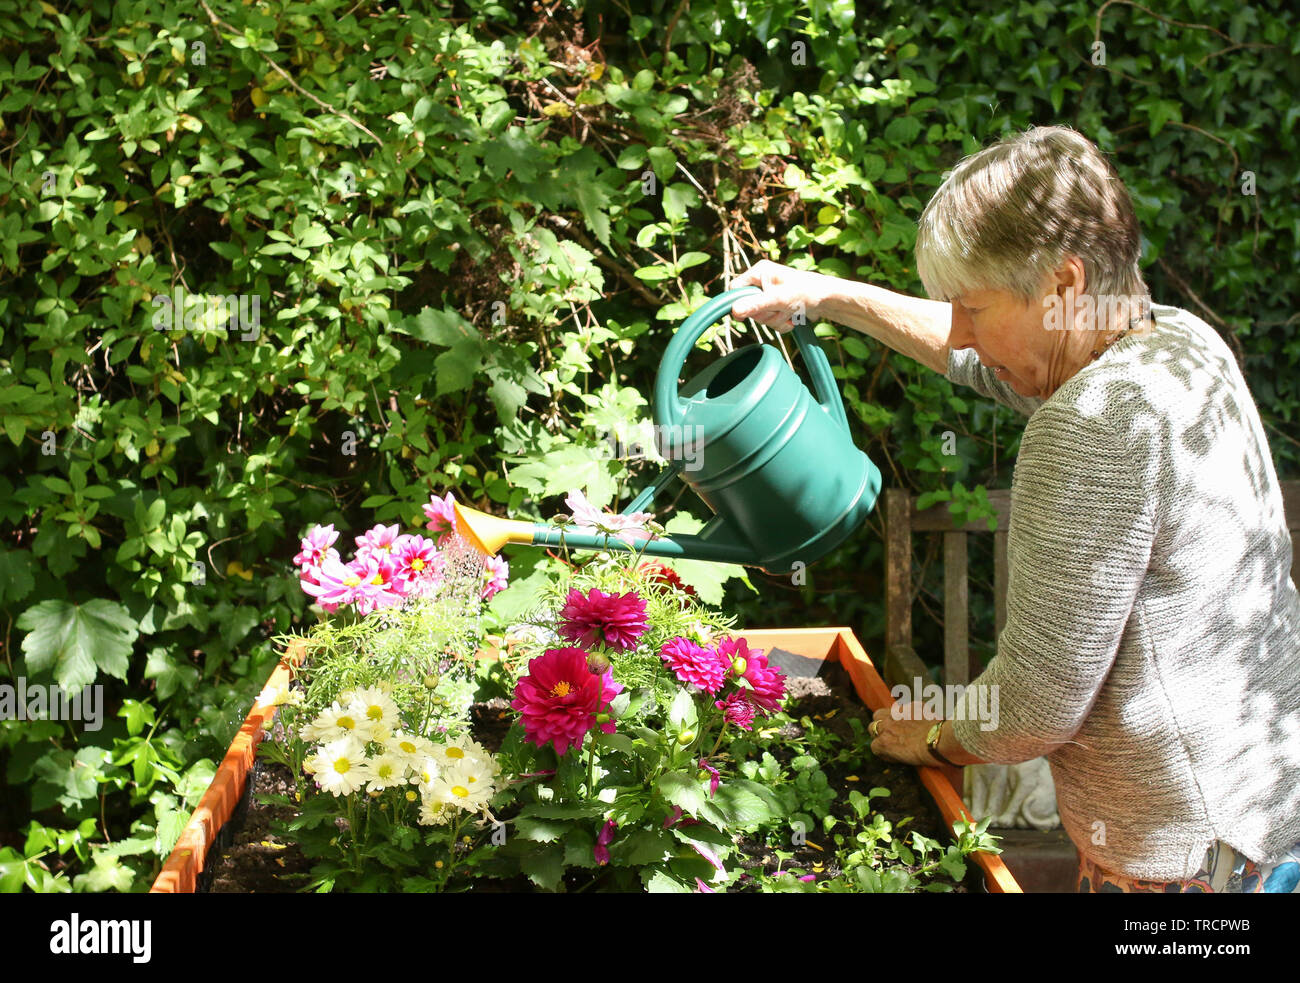 Elderly woman watering flowers in garden. Stock Photo